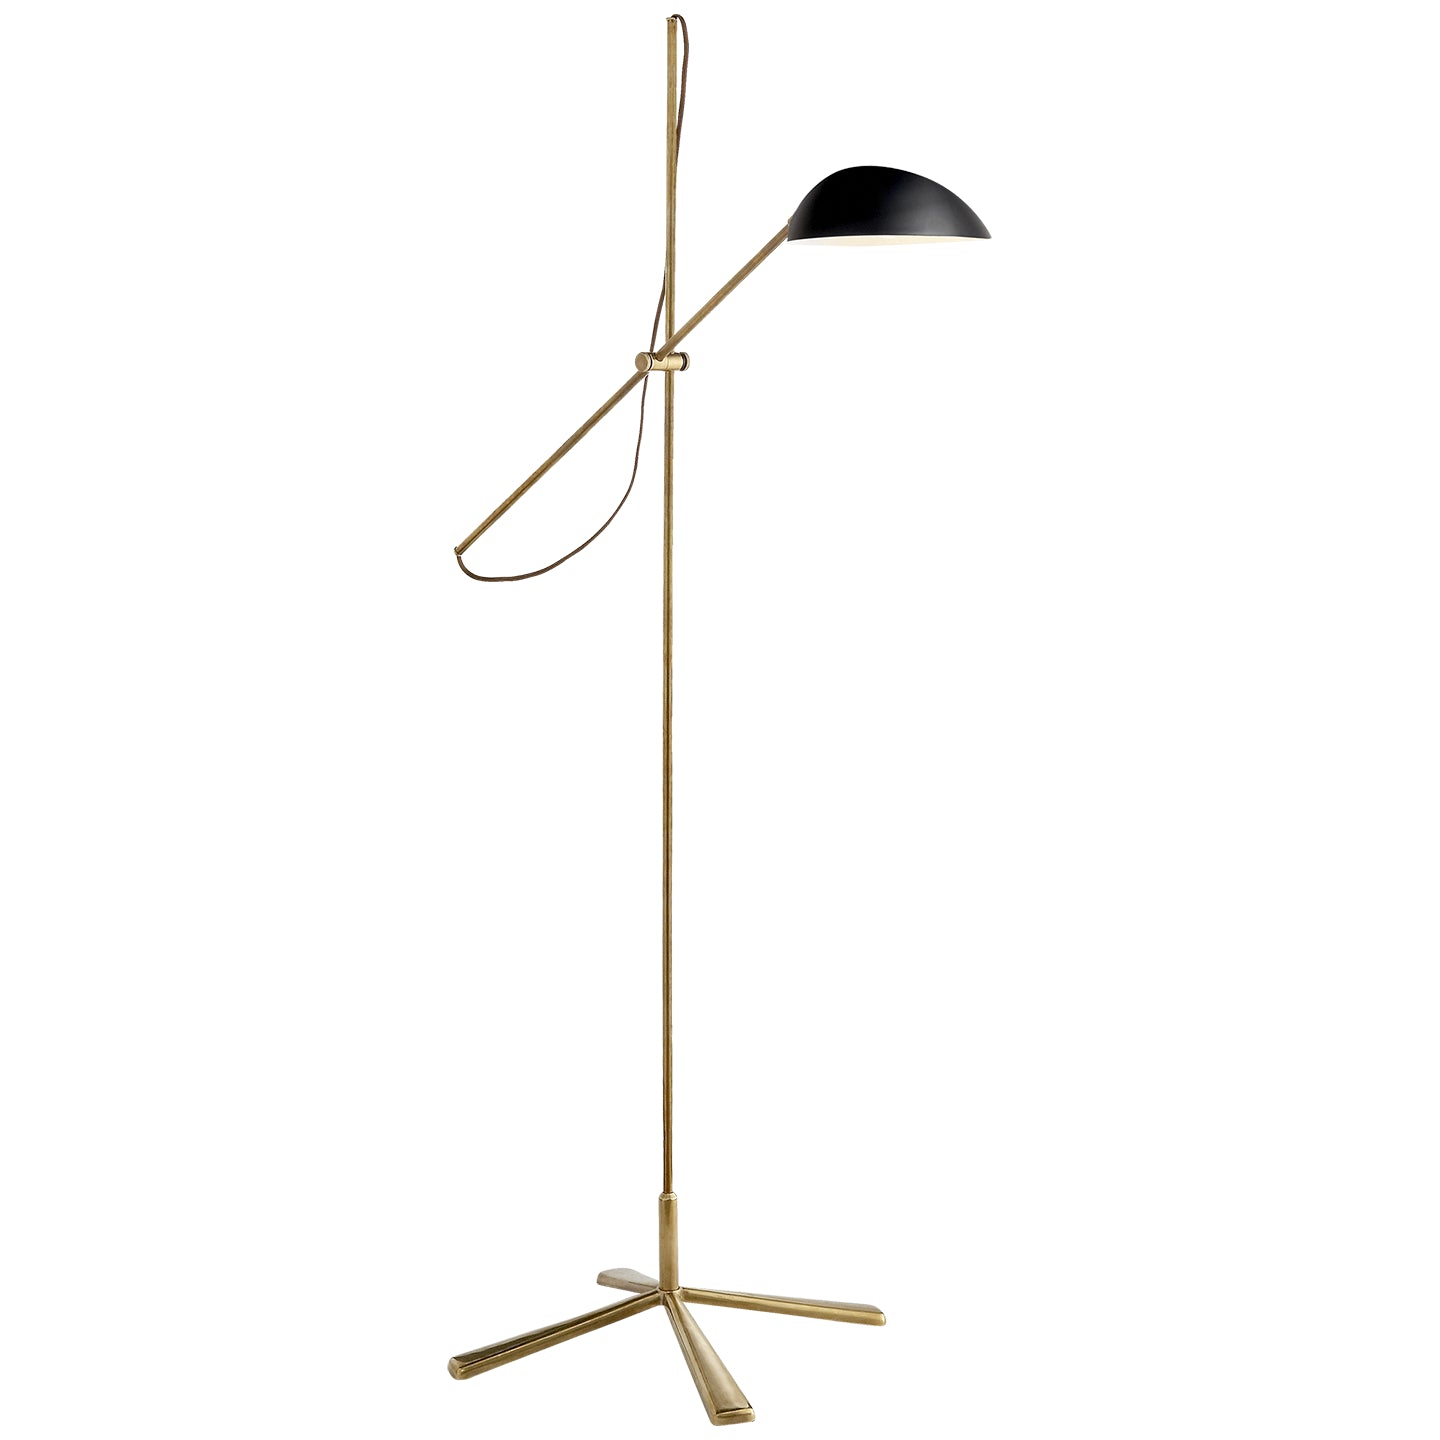 Visual Comfort Signature Canada - One Light Floor Lamp - Graphic - Hand-Rubbed Antique Brass- Union Lighting Luminaires Decor